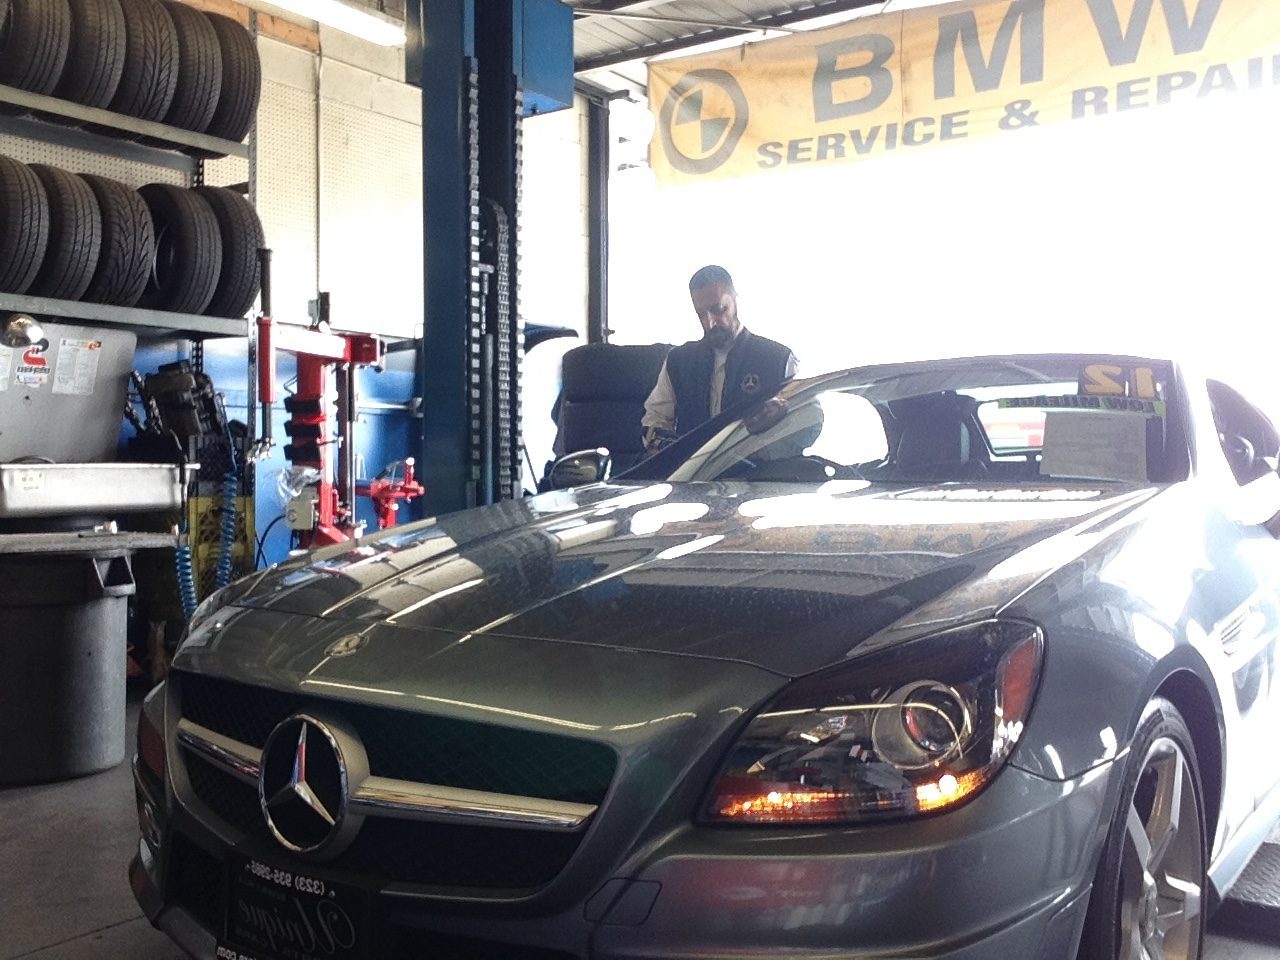 Mercedes Repair & service